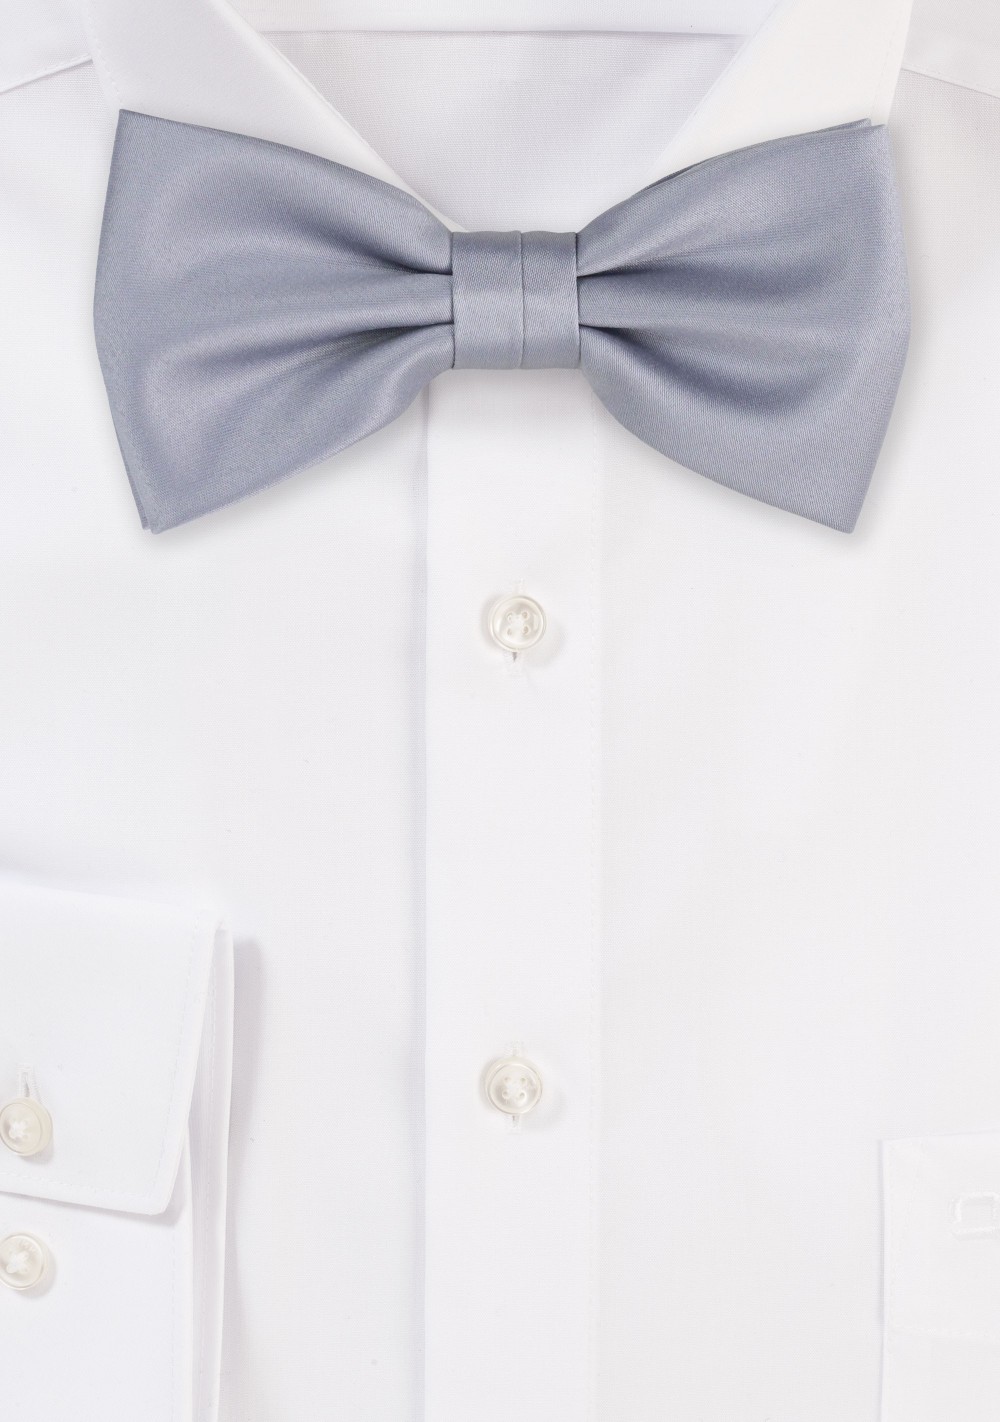 Shiny Silver Bow Tie